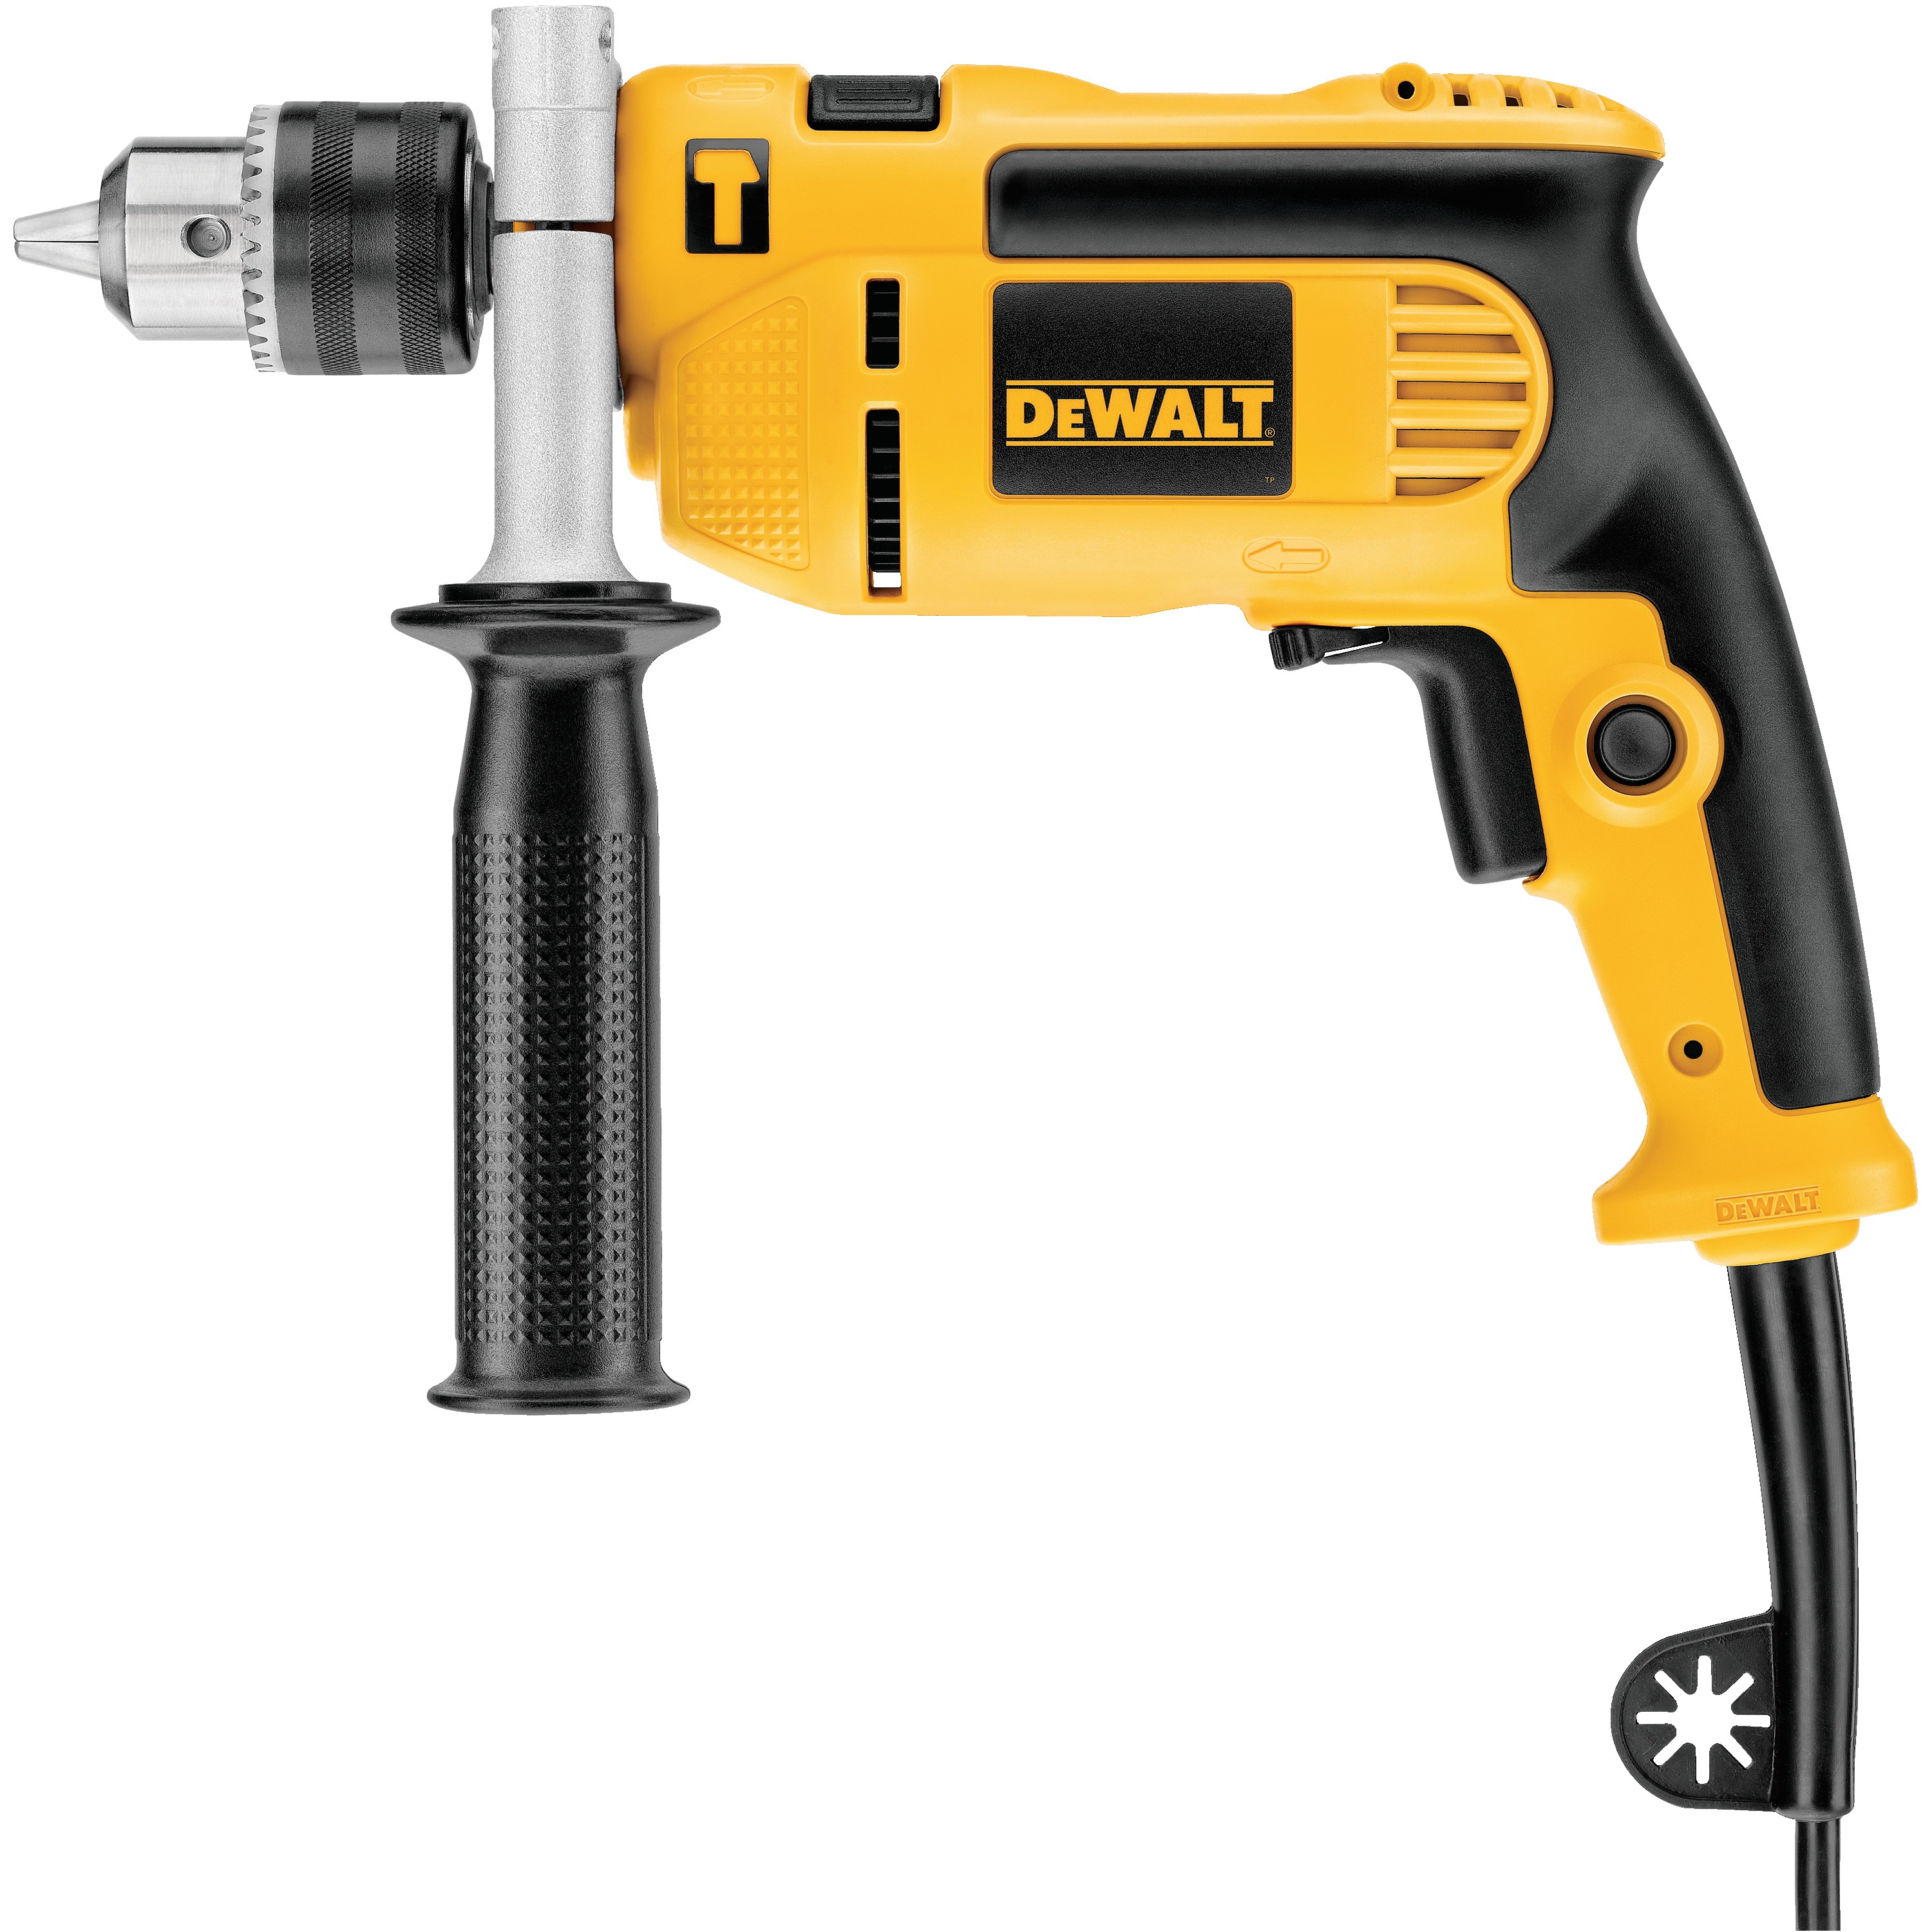 DEWALT DWE5010 Hammer Drill review